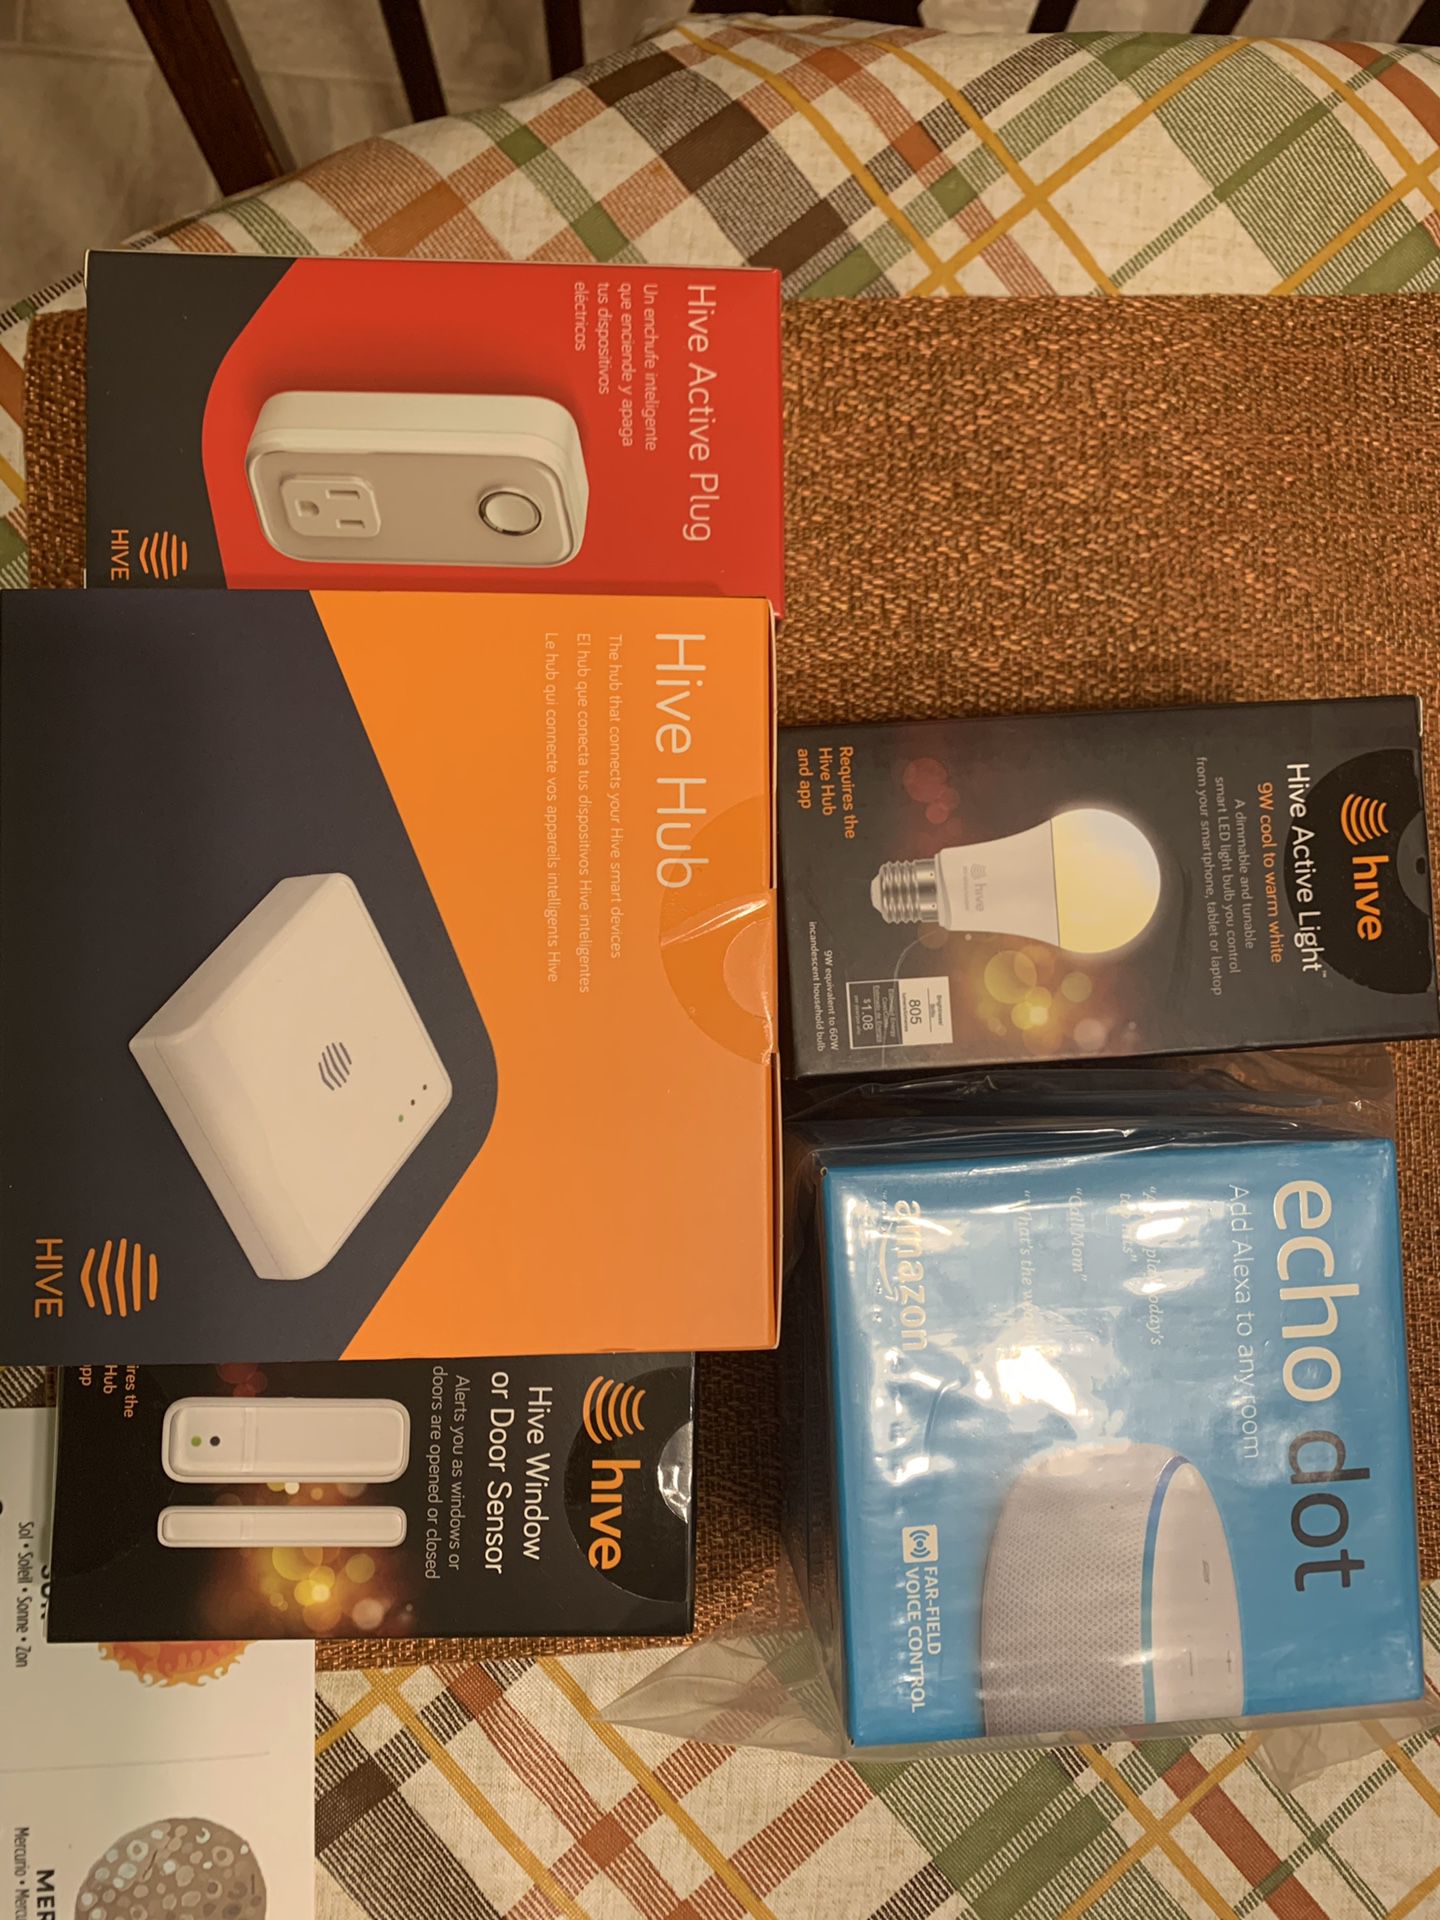 Hive Smart Home Starter Kit